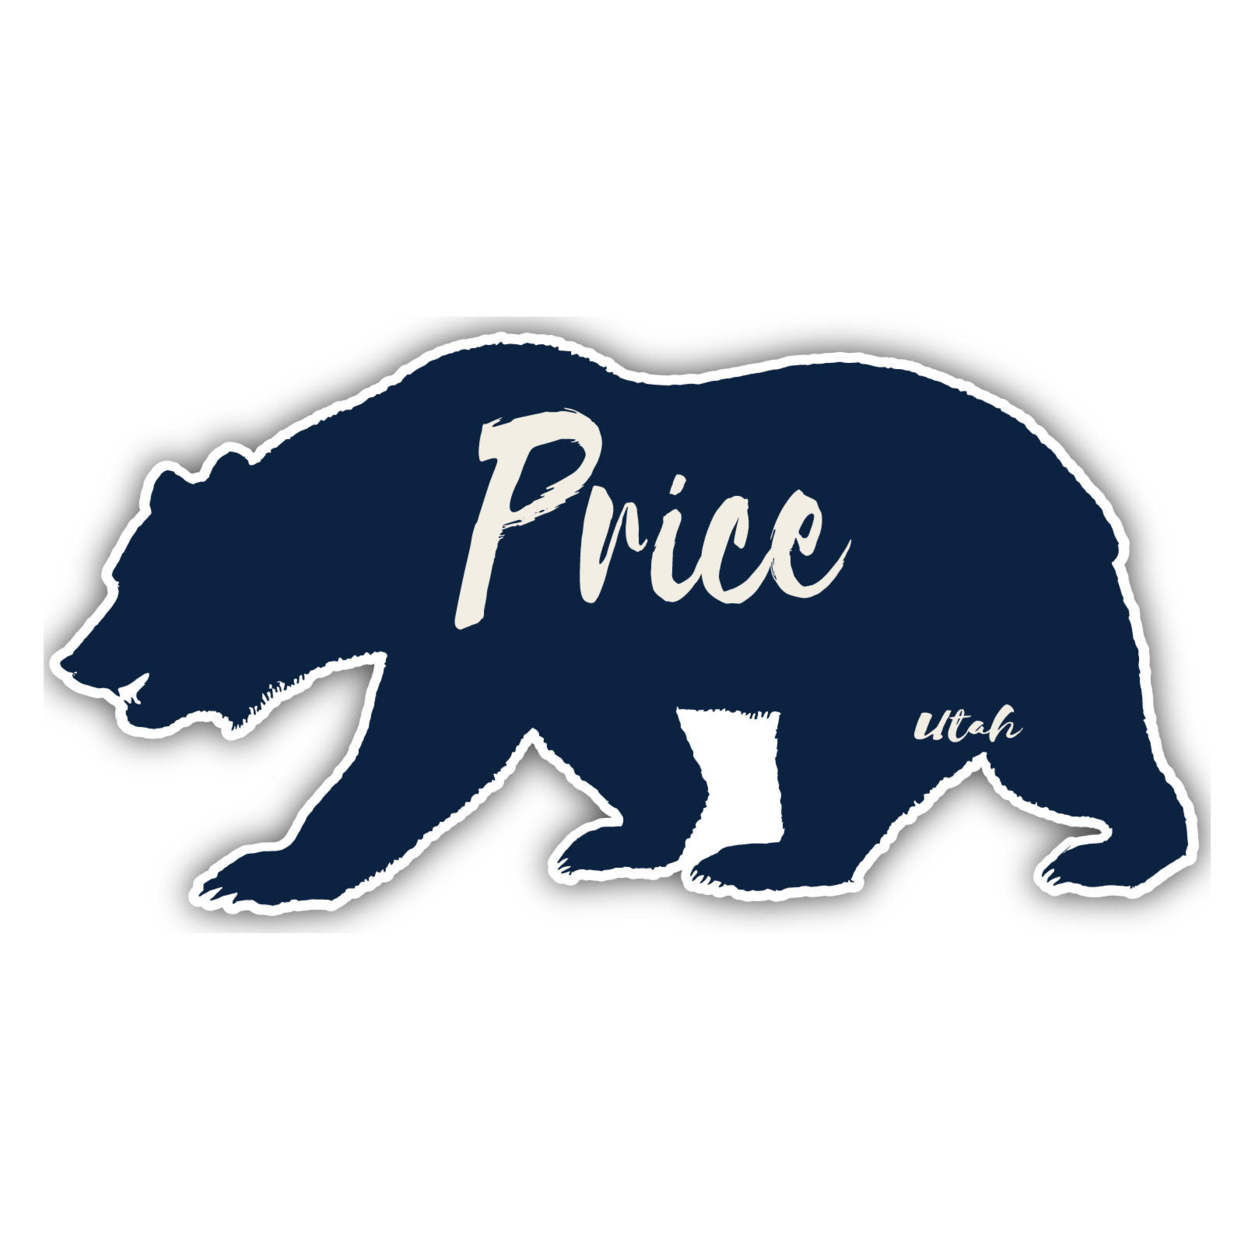 Price Utah Souvenir Decorative Stickers (Choose Theme And Size) - Single Unit, 4-Inch, Bear